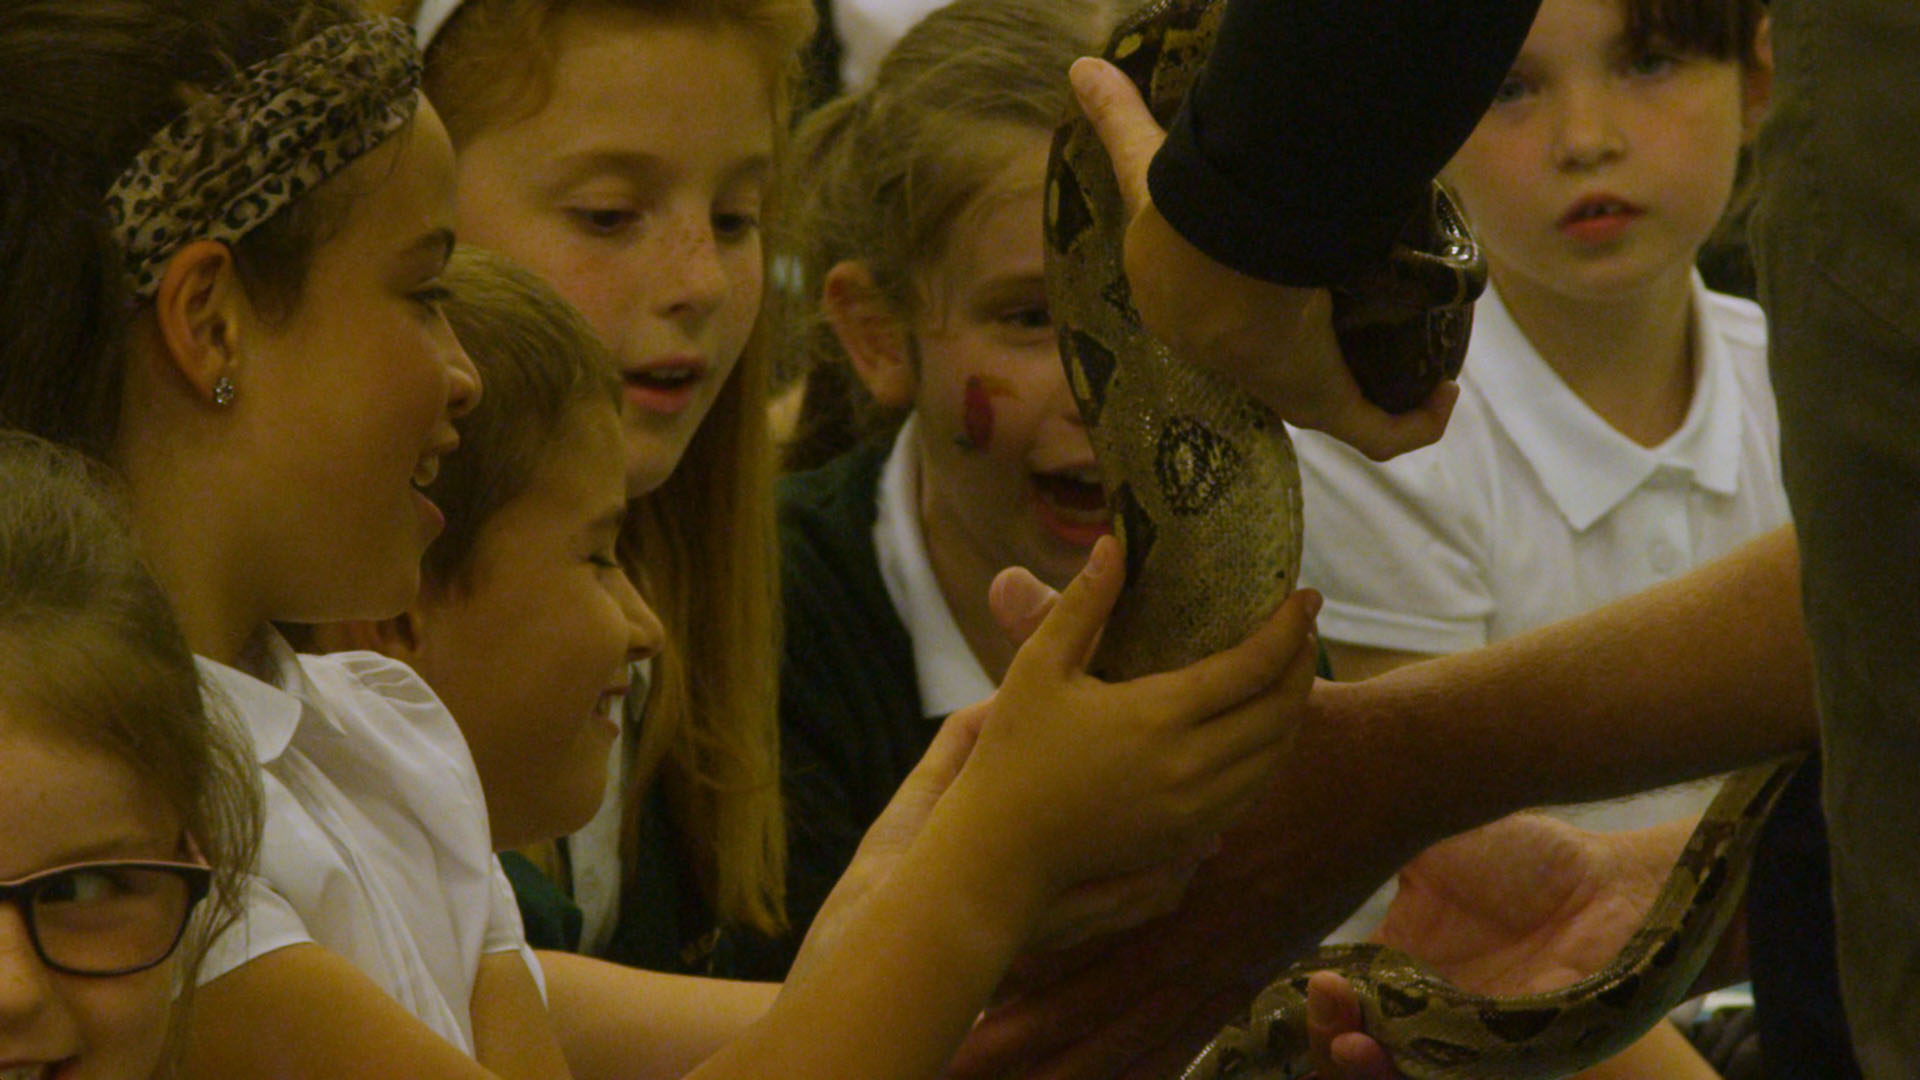 School children holding a snake